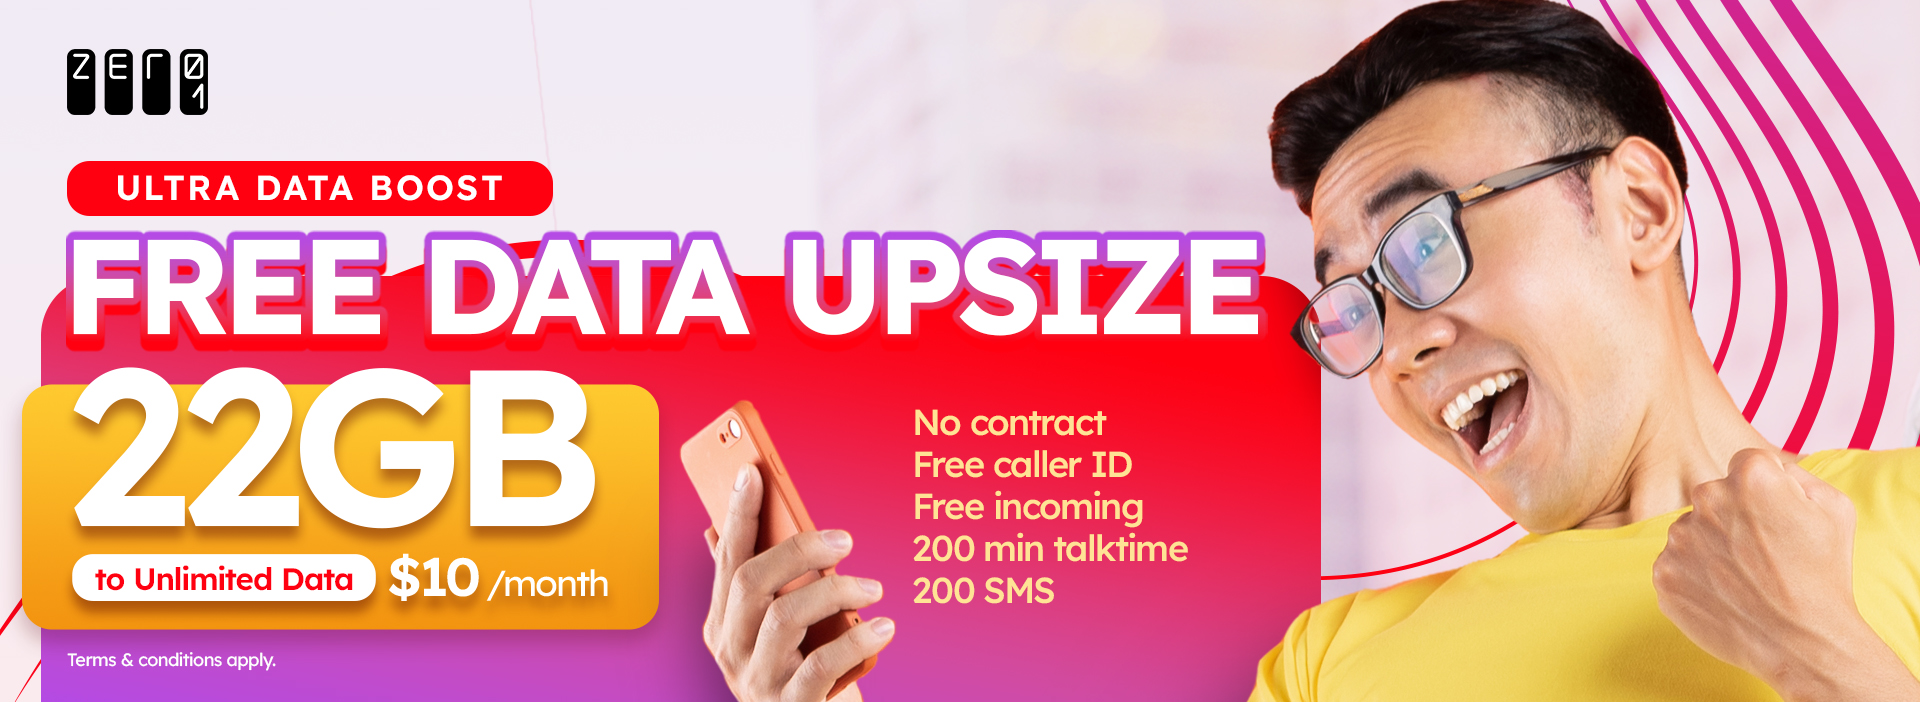 Ultra Data Boost - Zero1 Classic Mobile Plan - 22GB - Banner